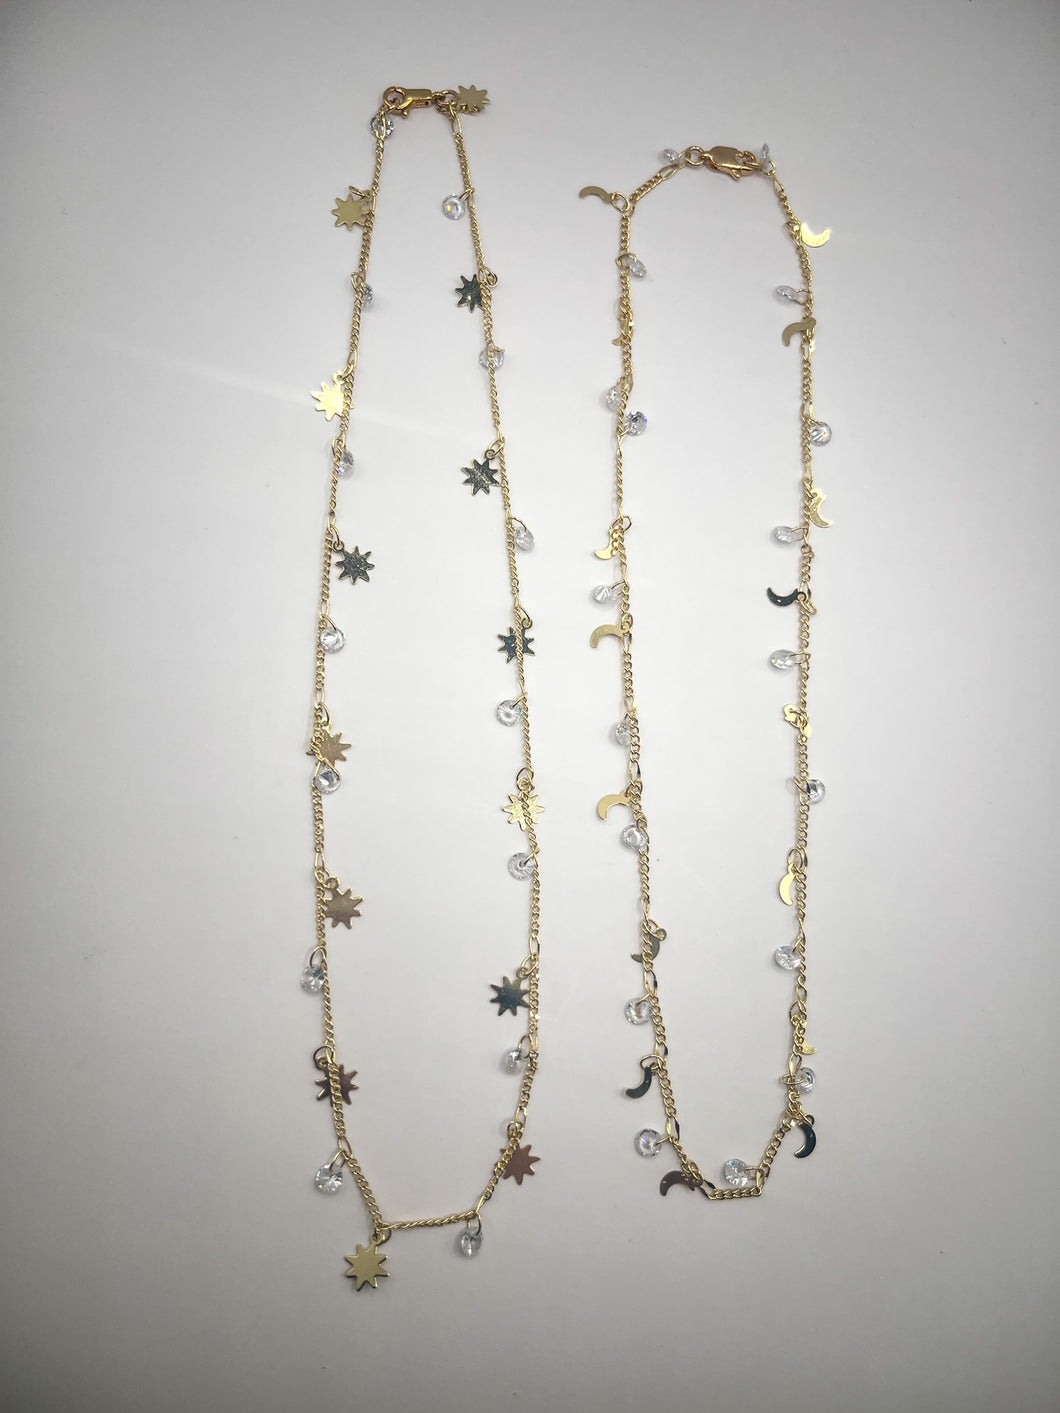 Celestial Choker Necklace - Gold Filled